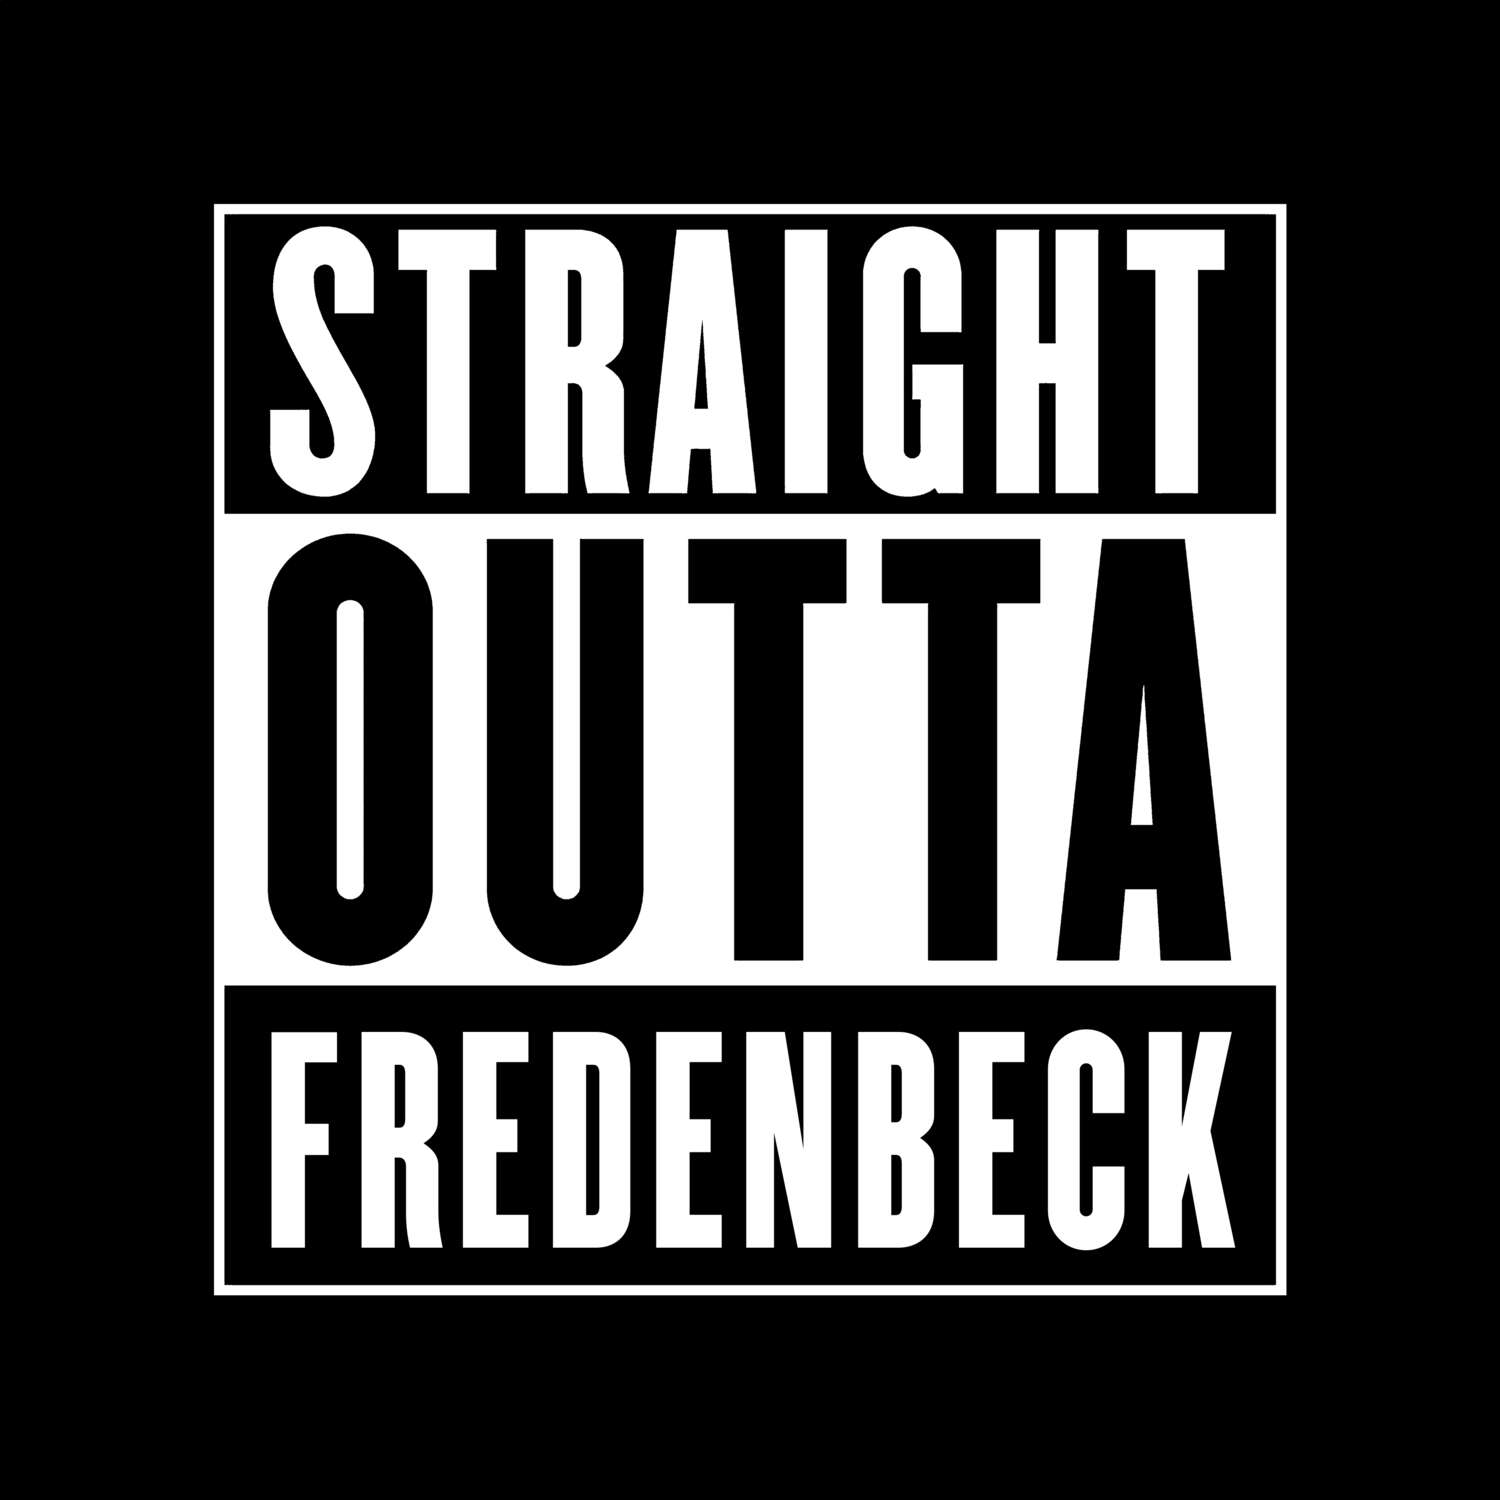 Fredenbeck T-Shirt »Straight Outta«